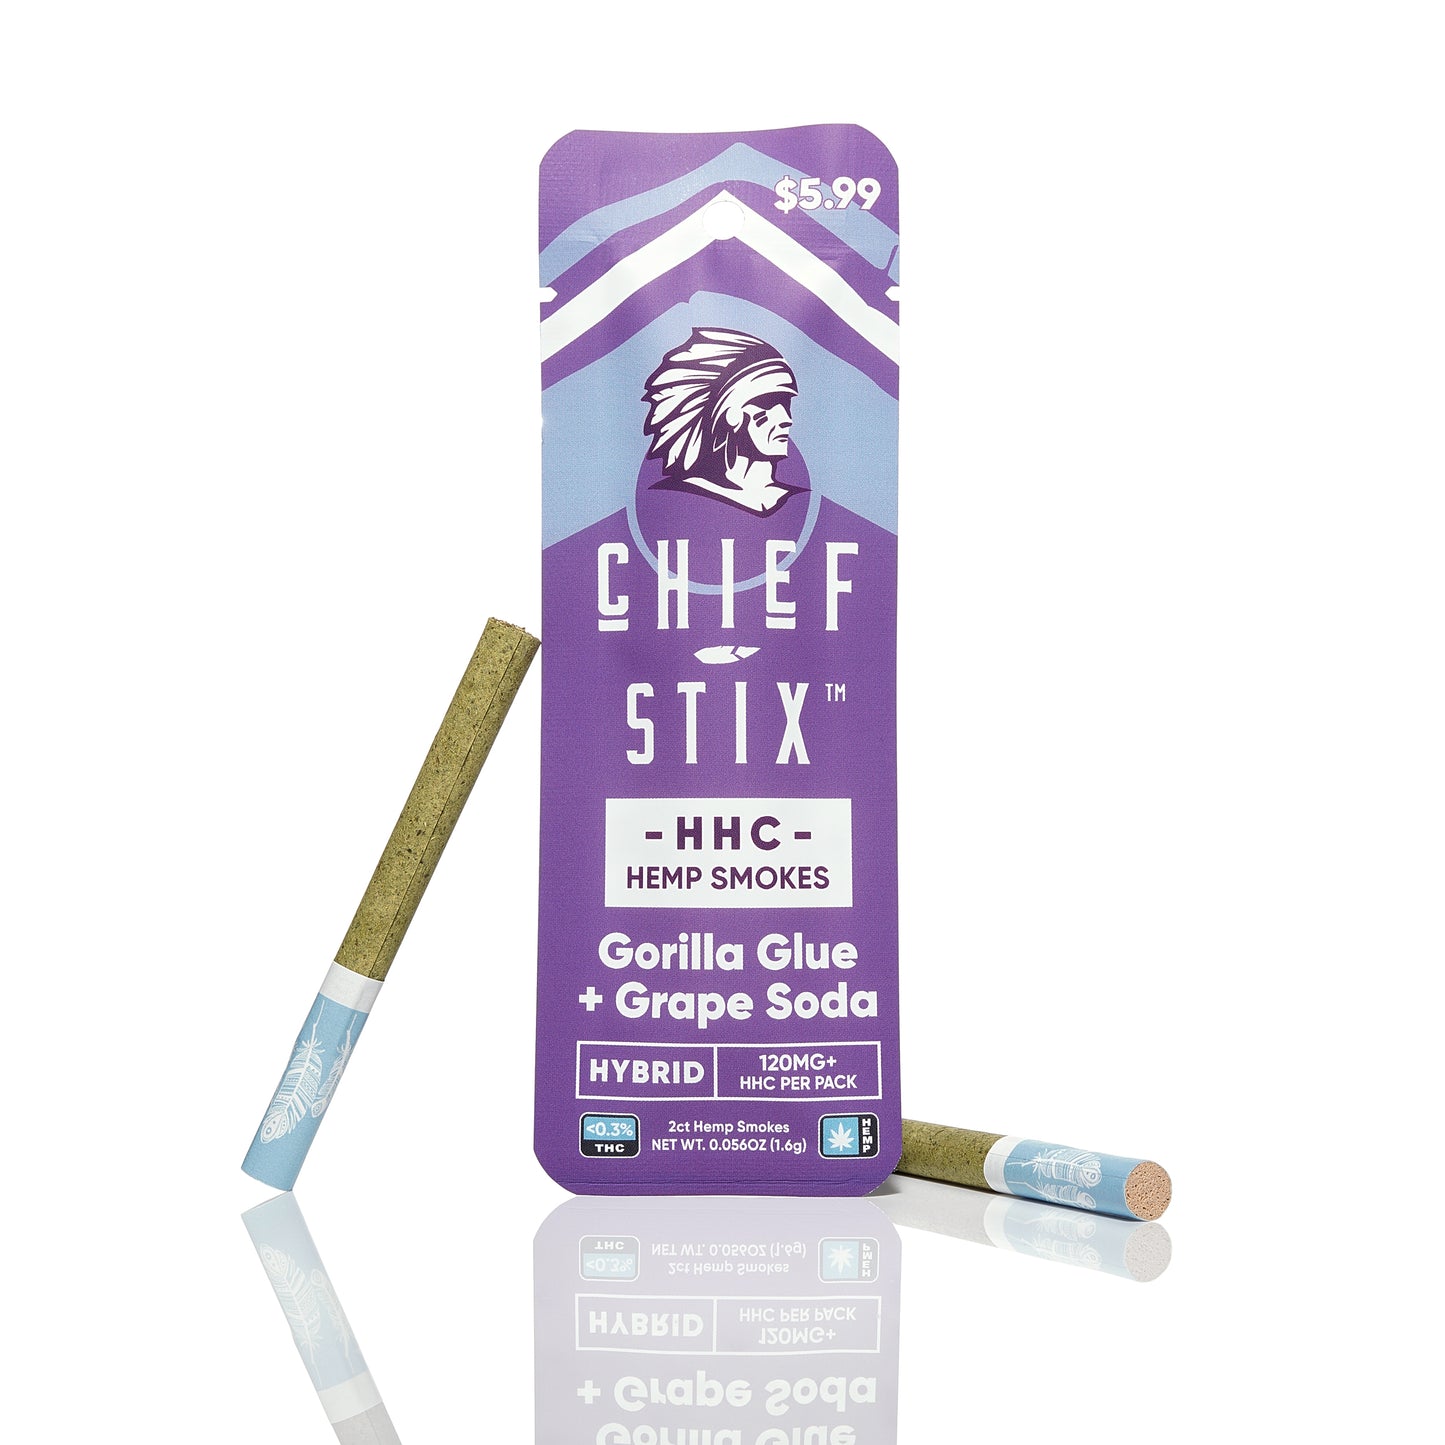 Chief Stix HHC Hemp Smokes 2ct Pouch - (45ct Tub)